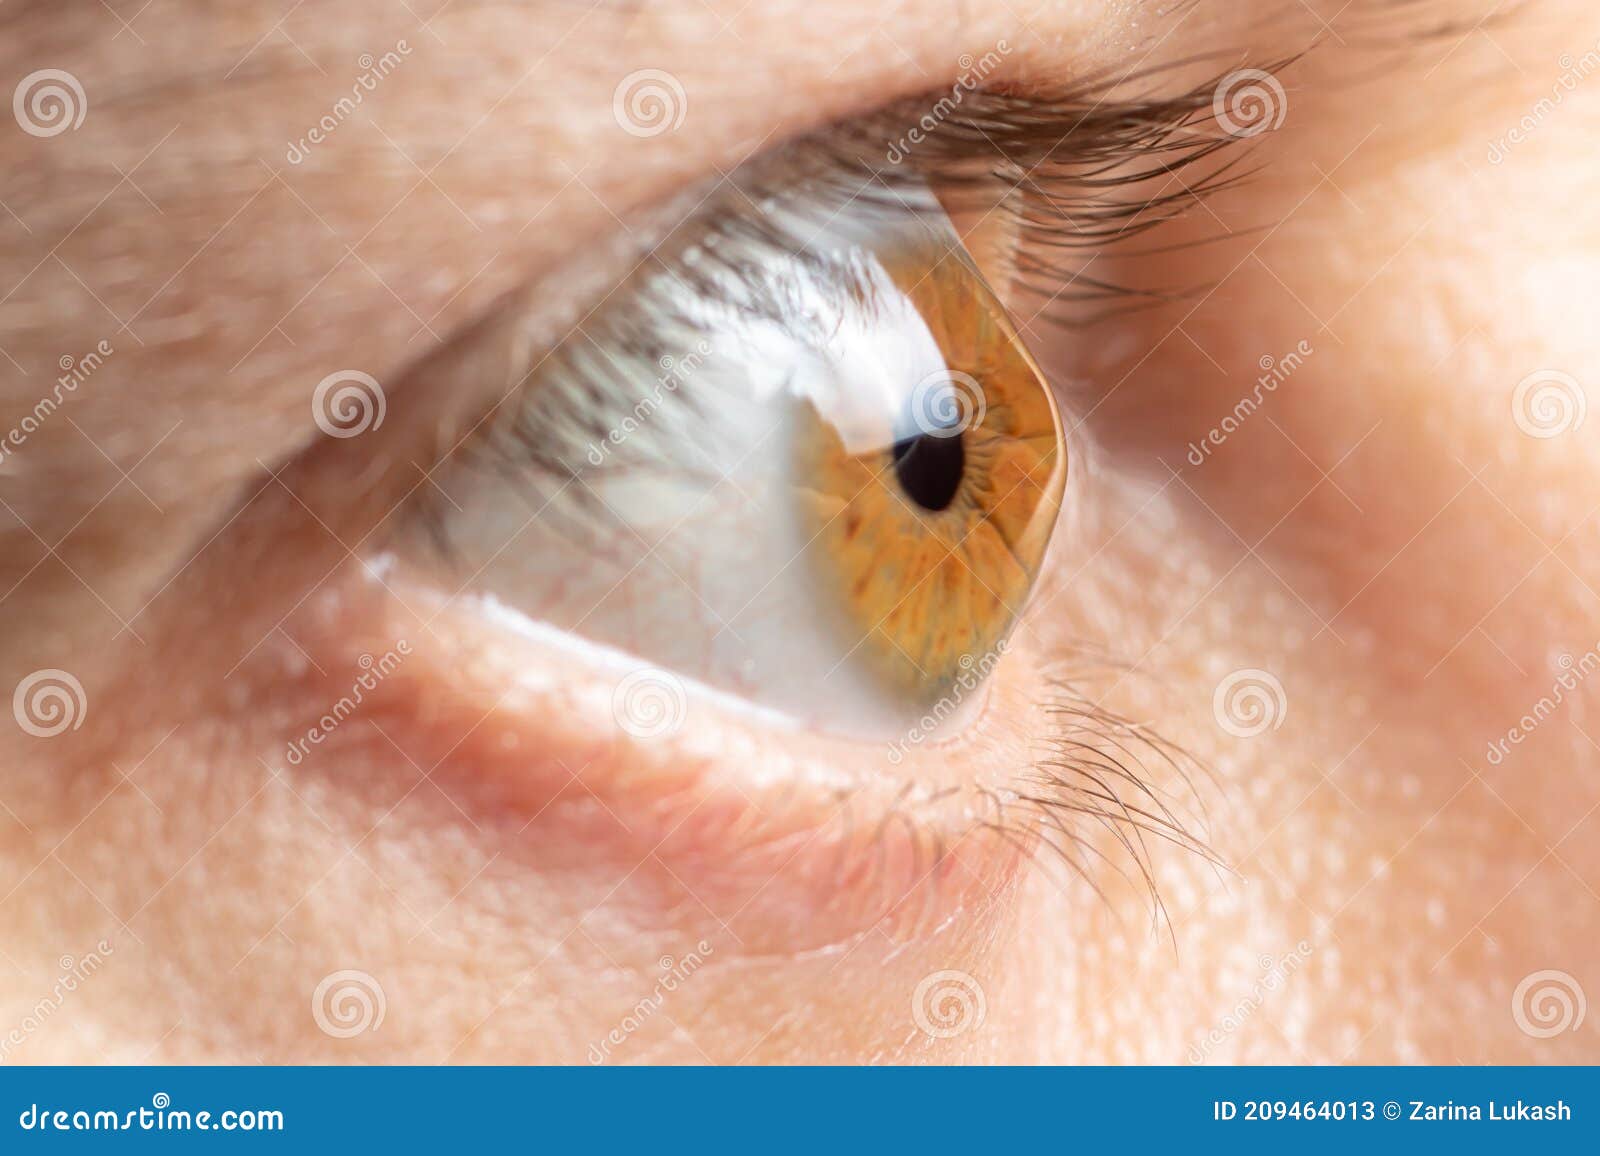 macro eye photo. keratoconus - eye disease, thinning of the cornea in the form of a cone. the cornea plastic. ophthalmology